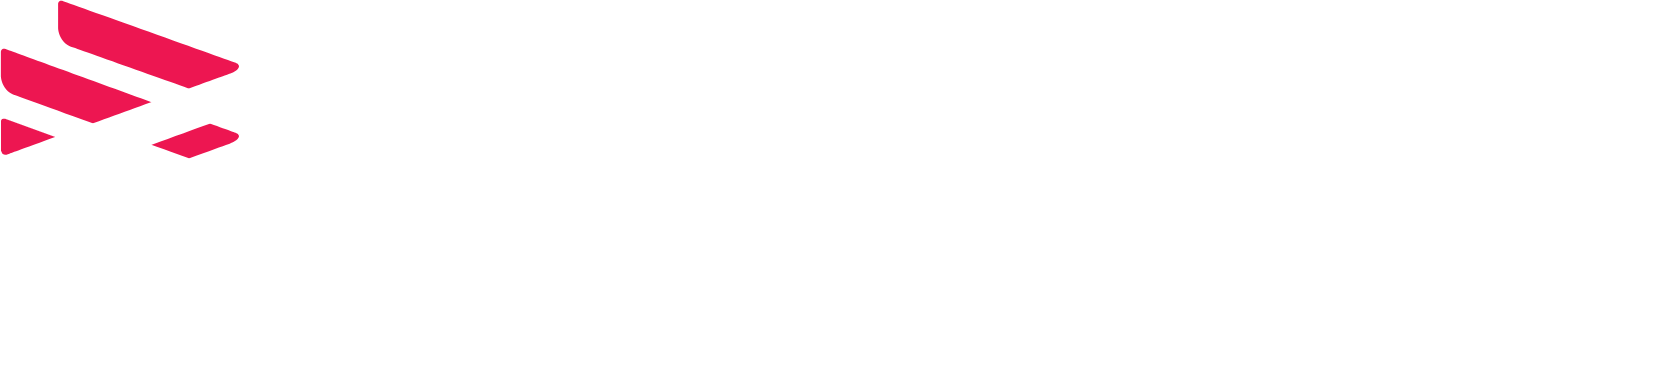 LATAM Airlines  logo large for dark backgrounds (transparent PNG)